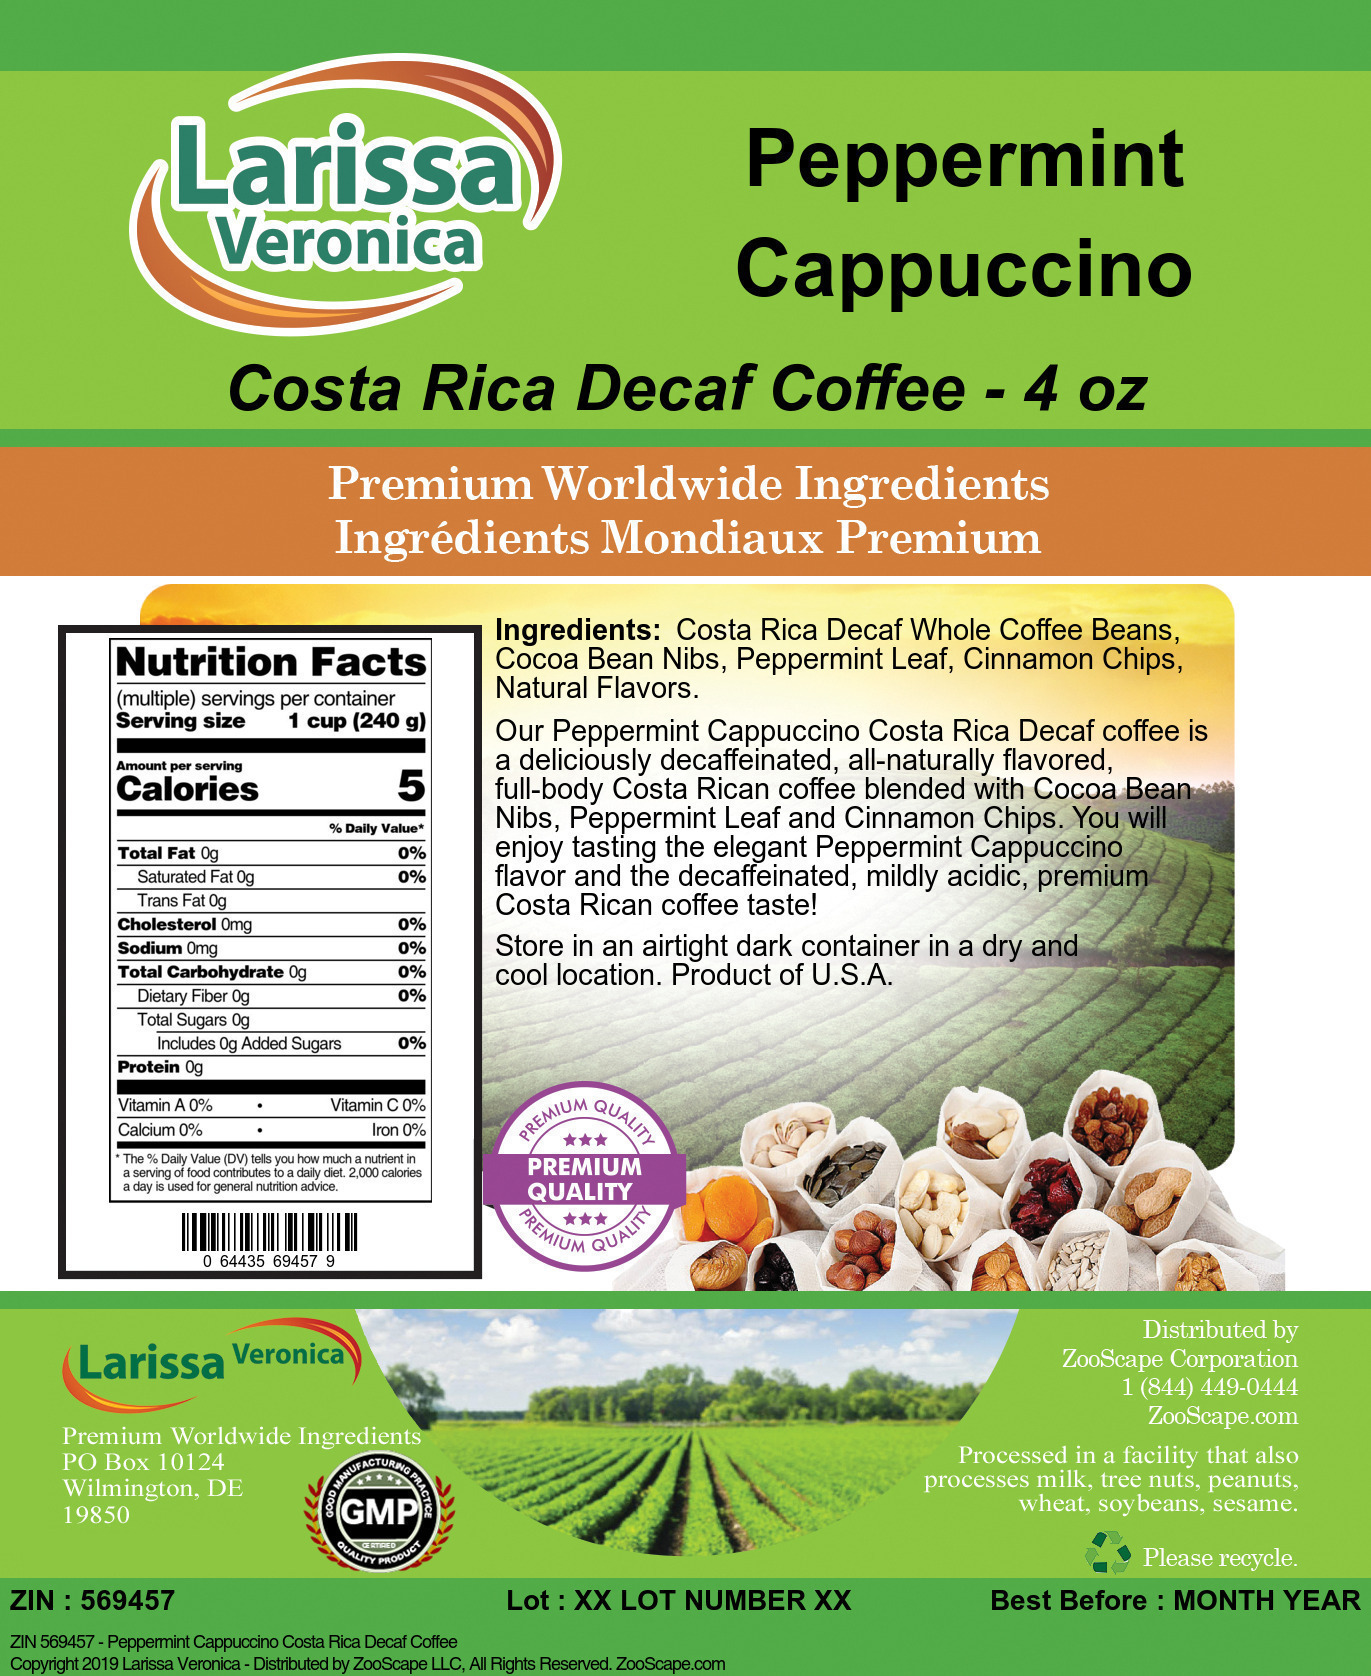 Peppermint Cappuccino Costa Rica Decaf Coffee - Label